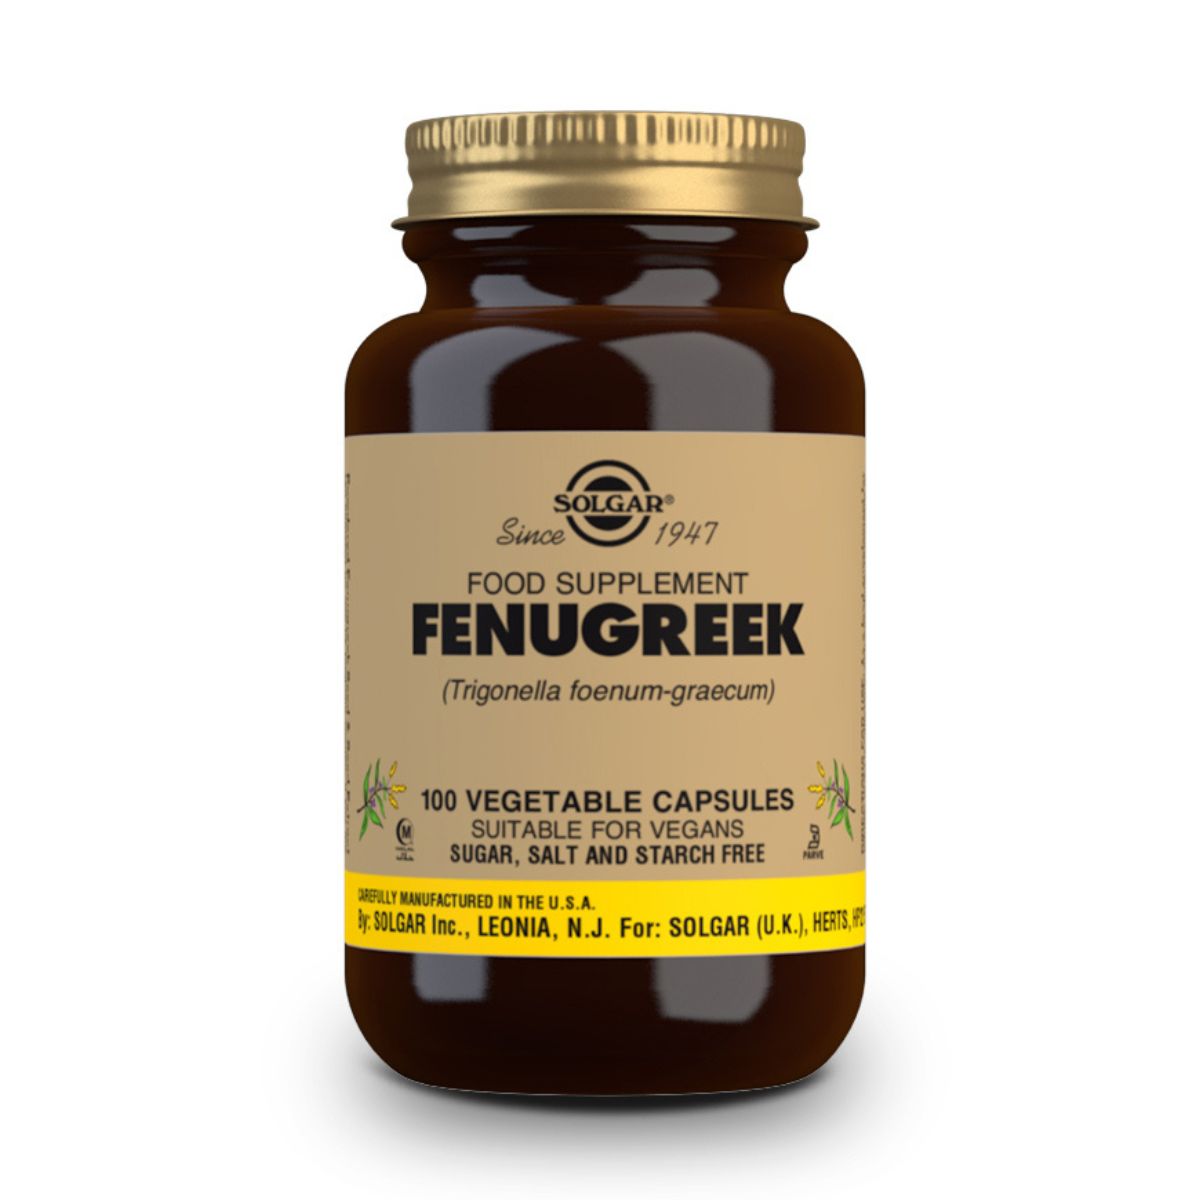 Fenogreco 520 mg – 100 Cápsulas Veganas